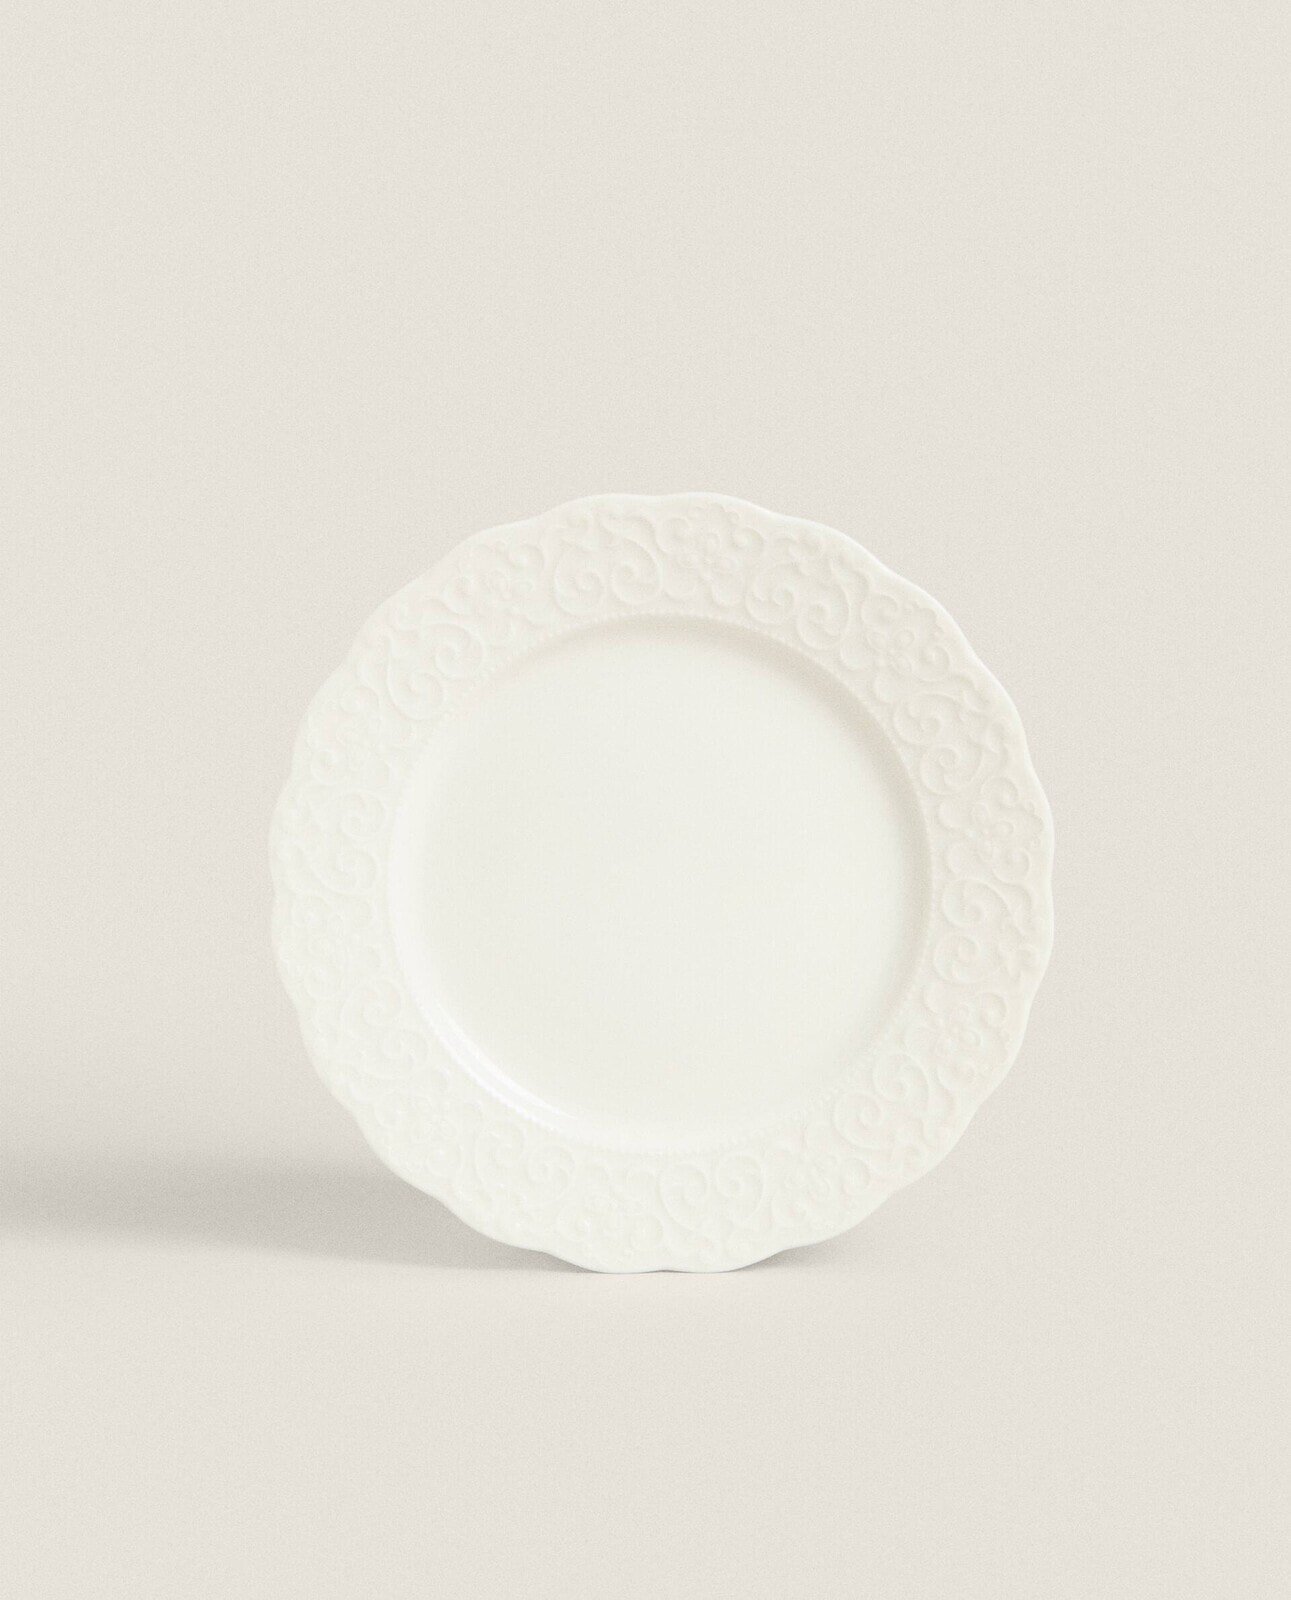 Porcelain dessert plate